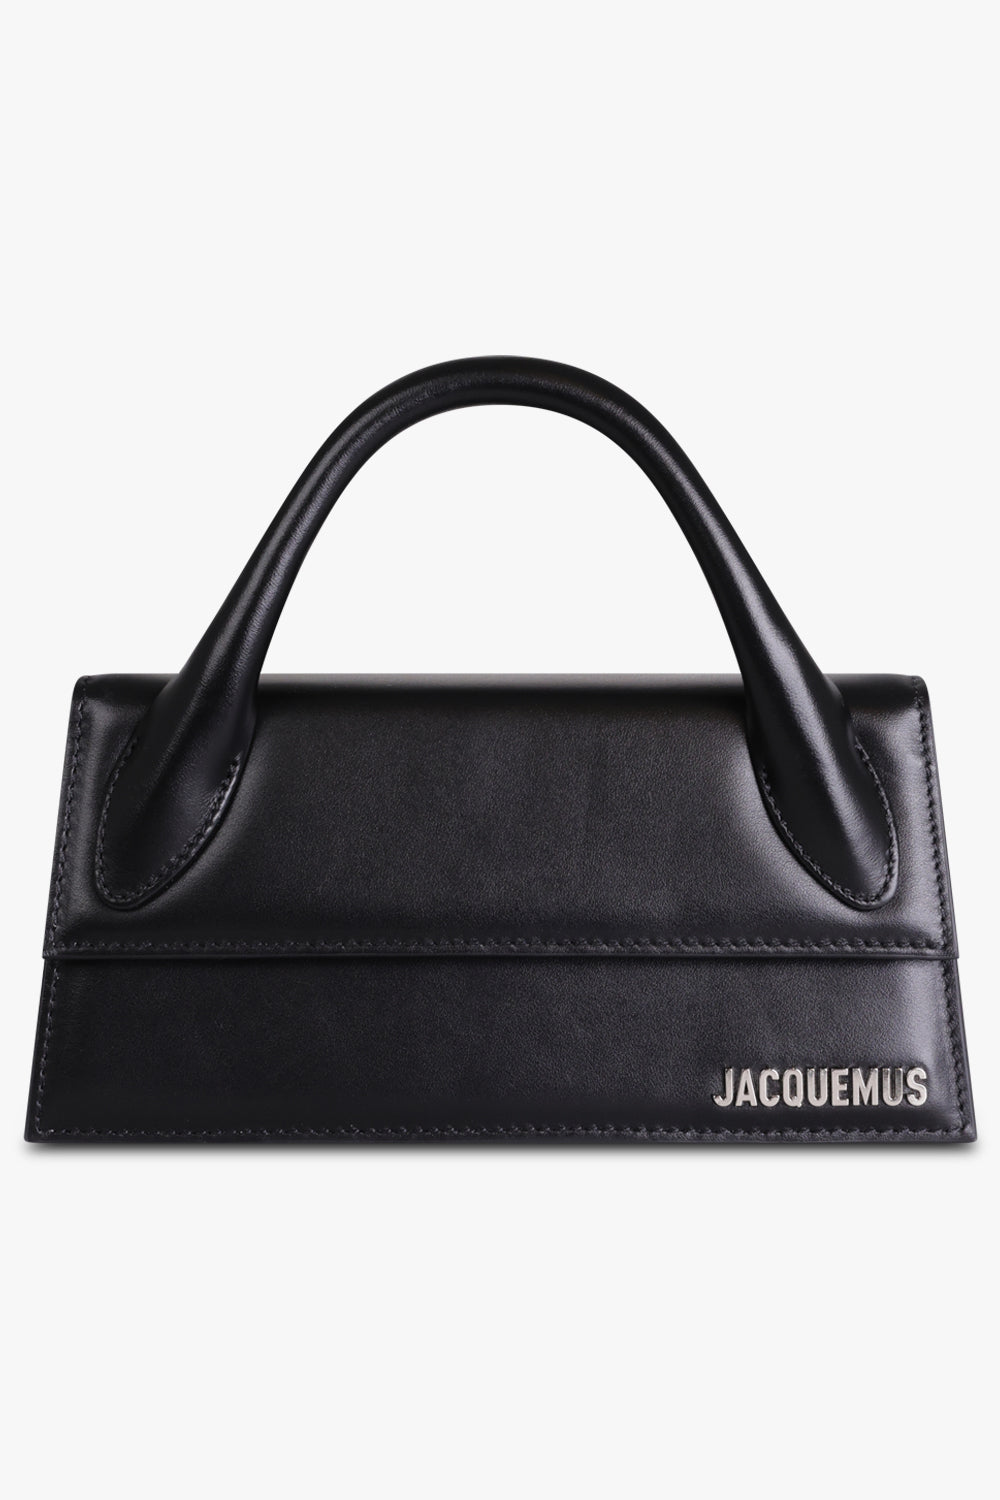 JACQUEMUS BAGS Black Le Chiquito Long Bag | Black/Silver